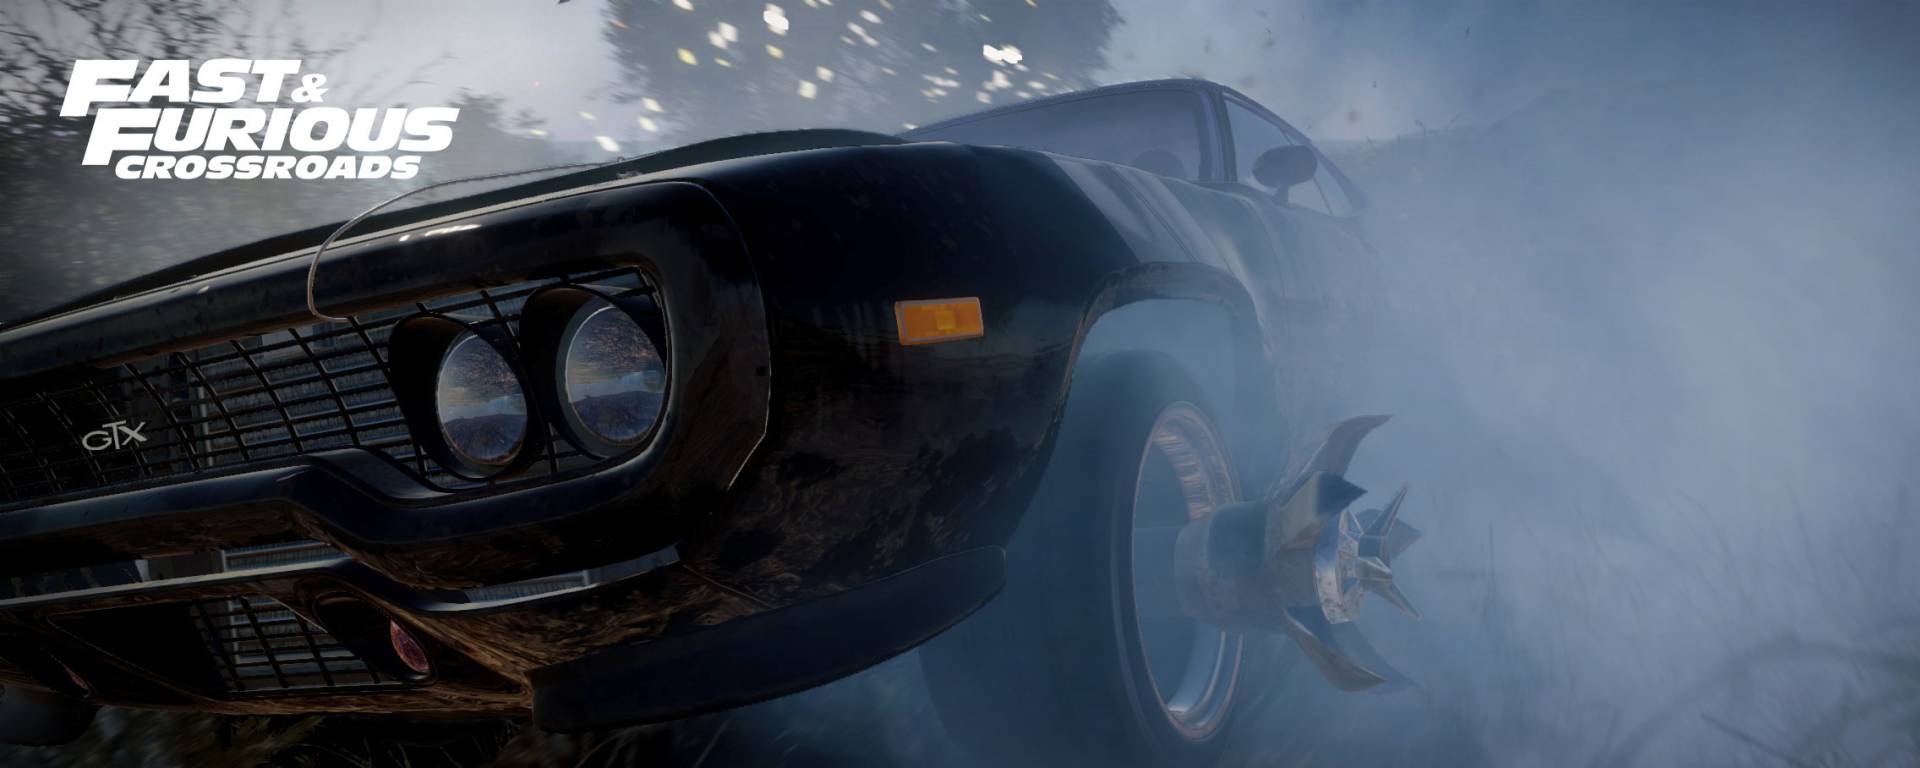 Fast & Furious Crossroads برای PC